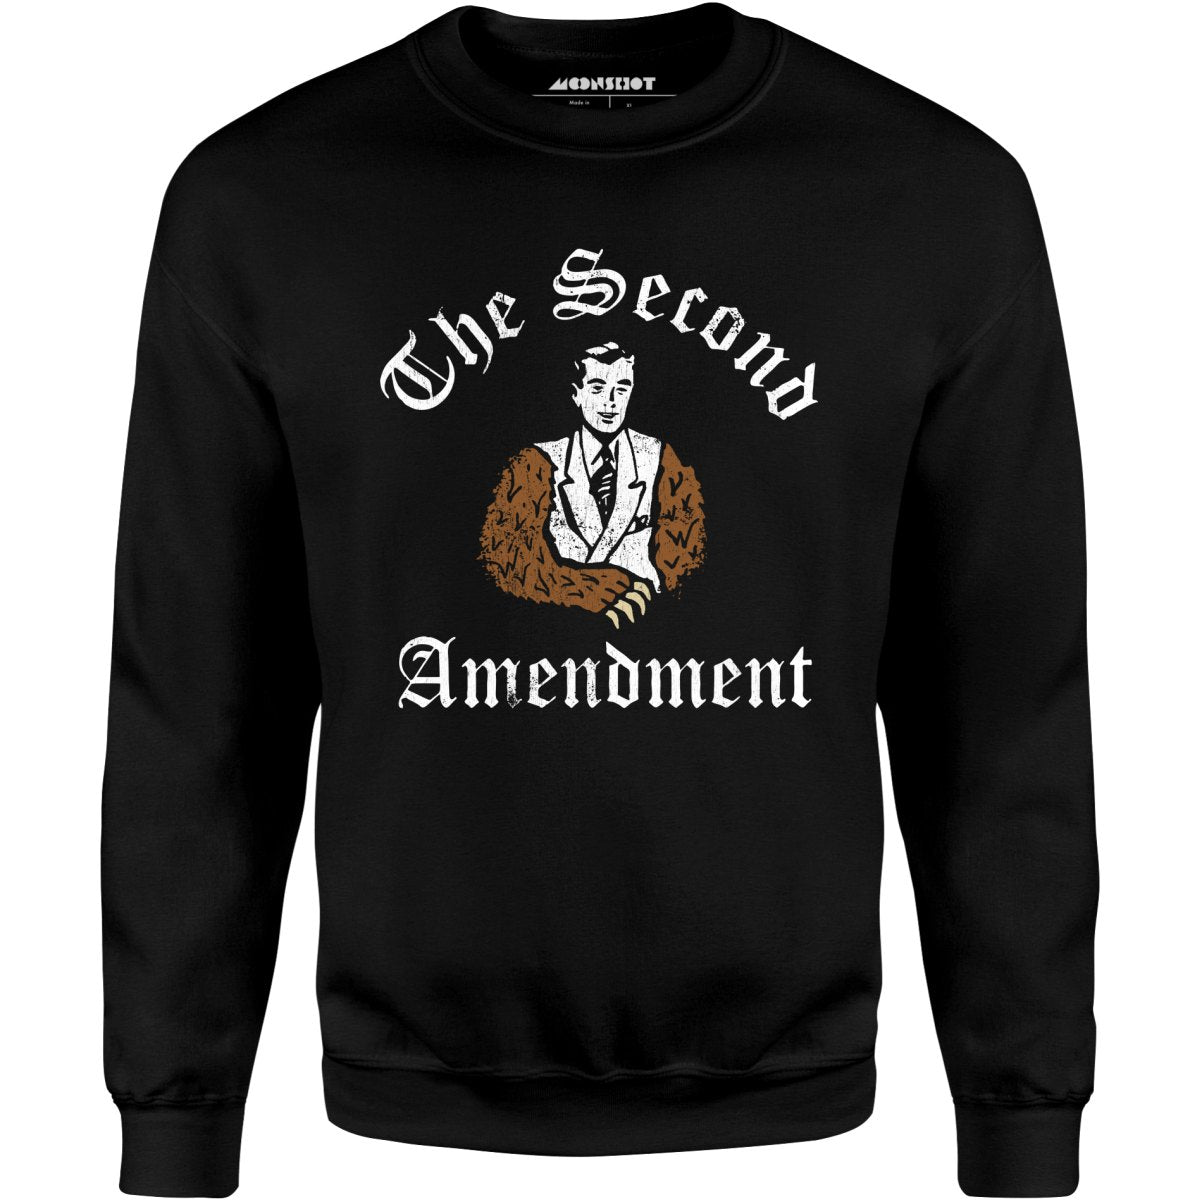 2nd Amendment - Right to Bear Arms - Unisex Sweatshirt